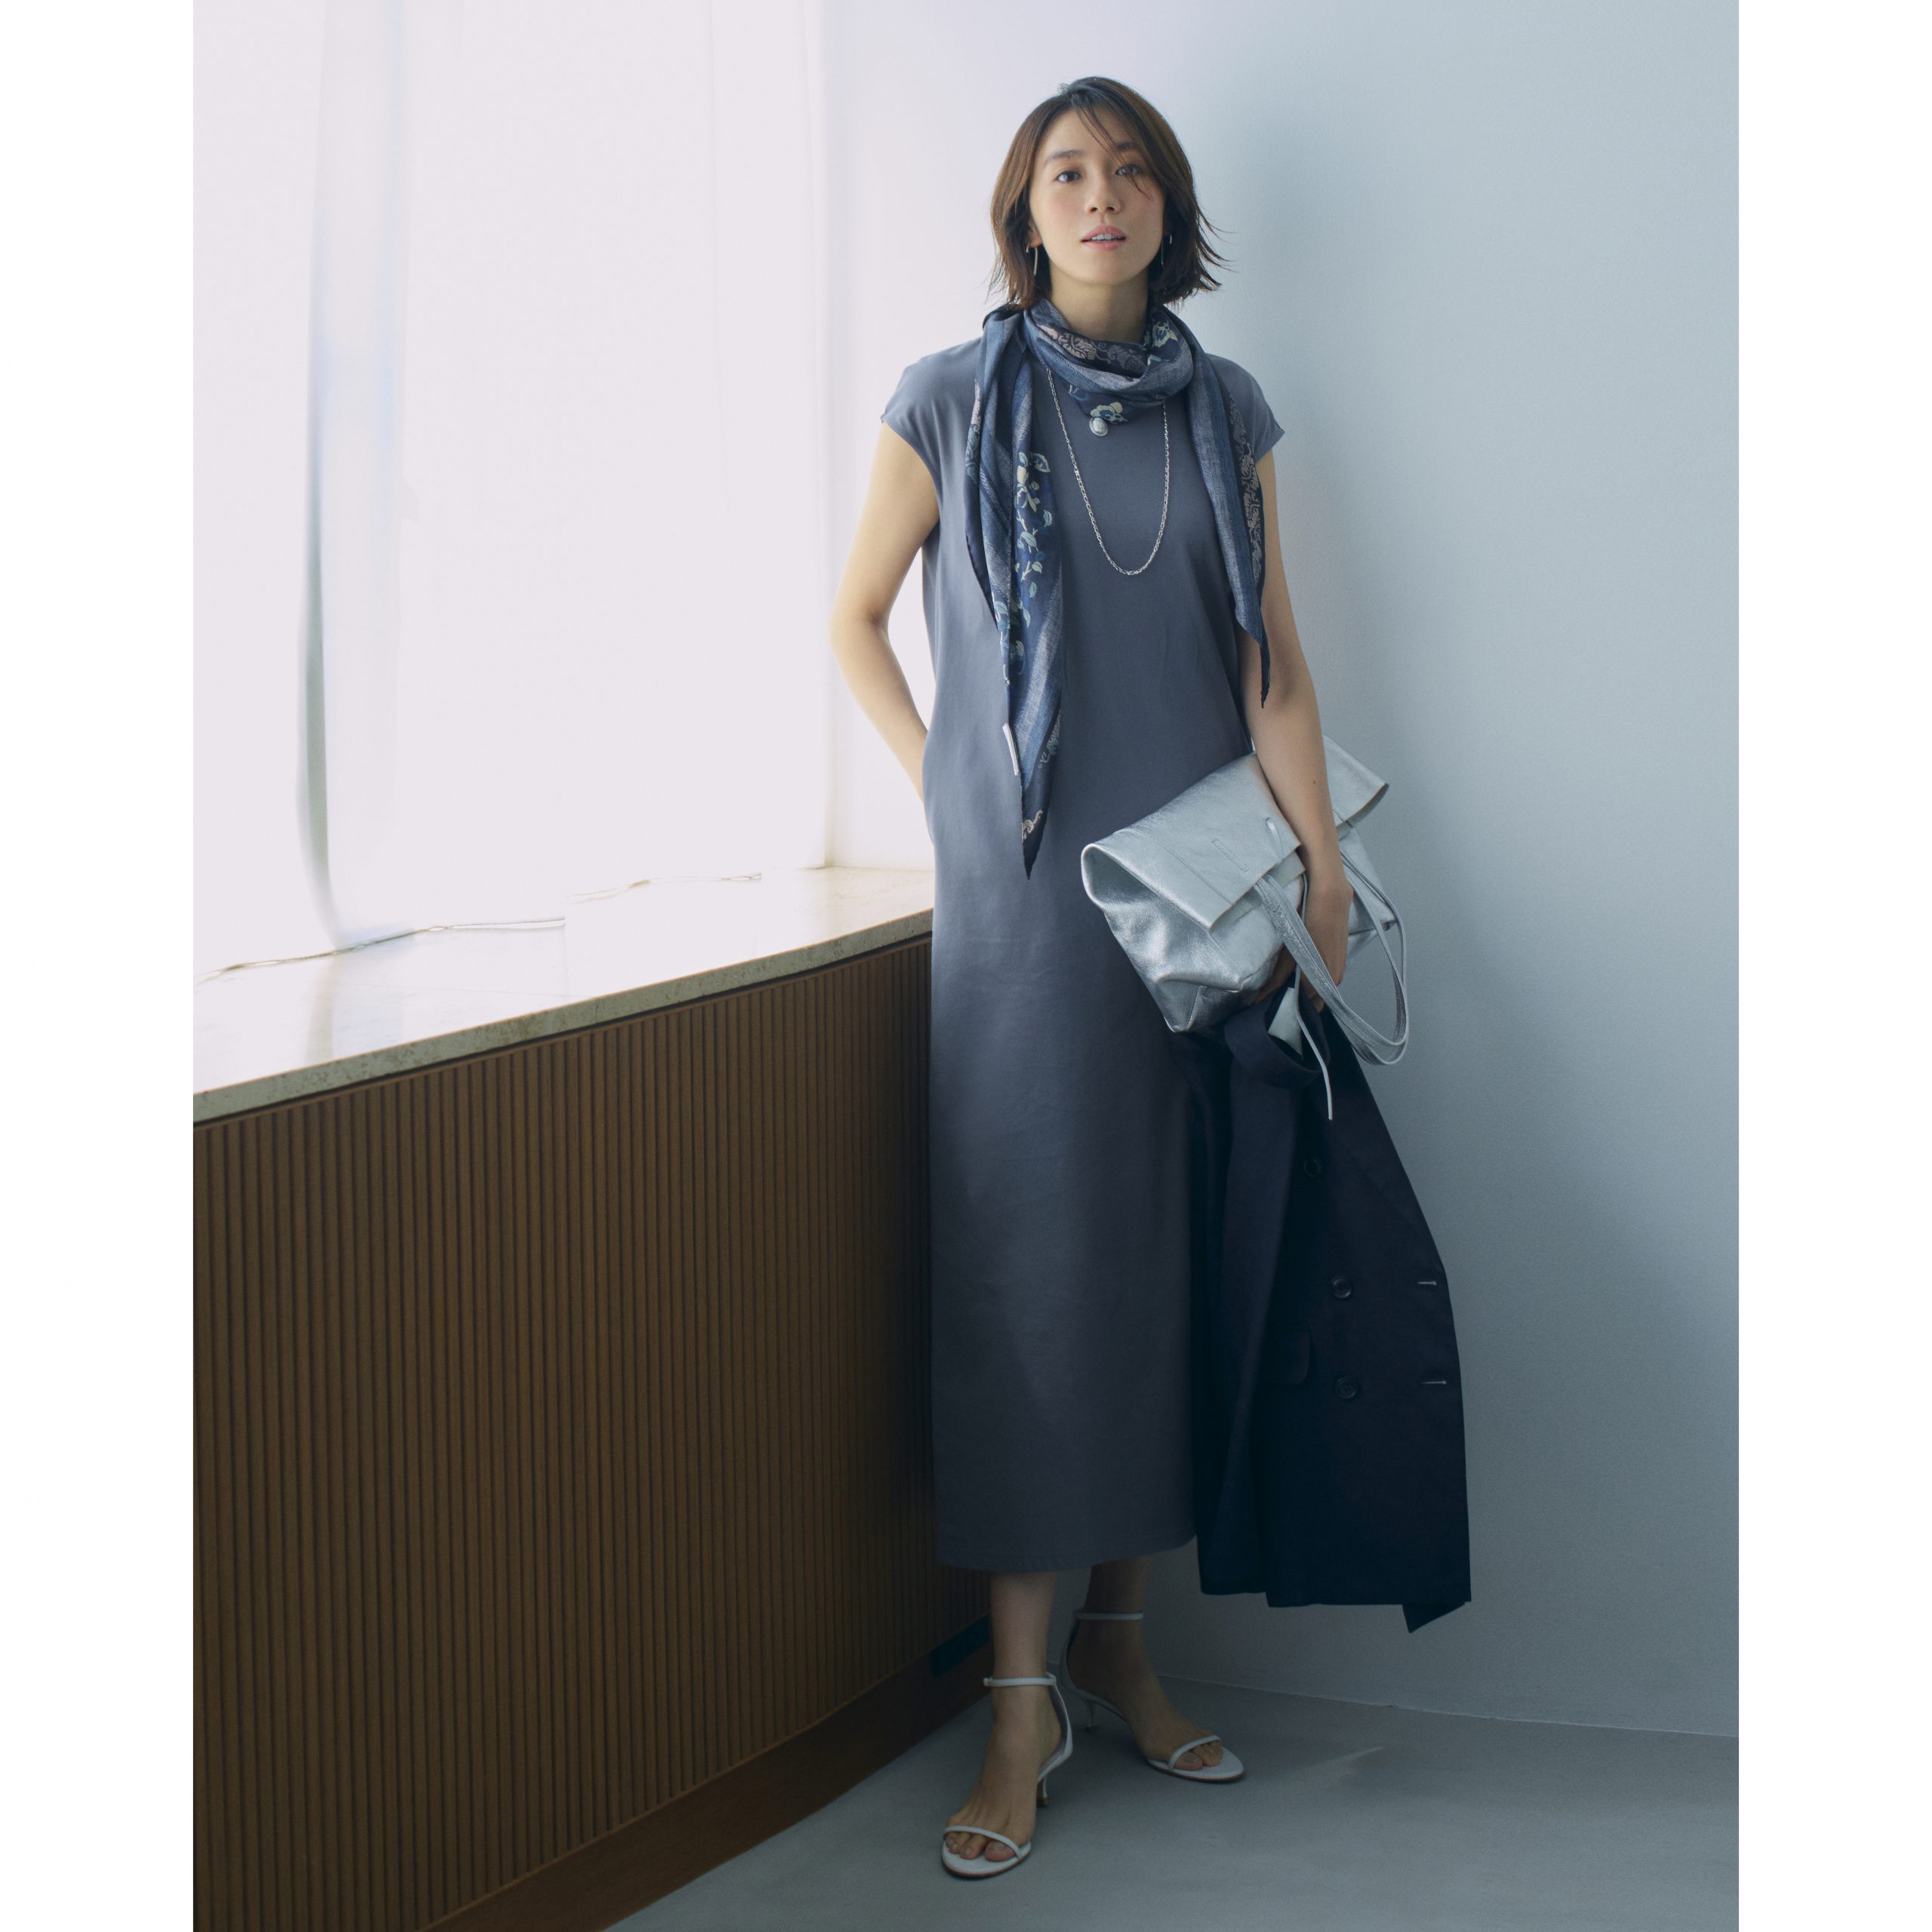 Marisolオリジナルブランド・M7daysの新作「大人グレーなワンピース」【40代ファッション】